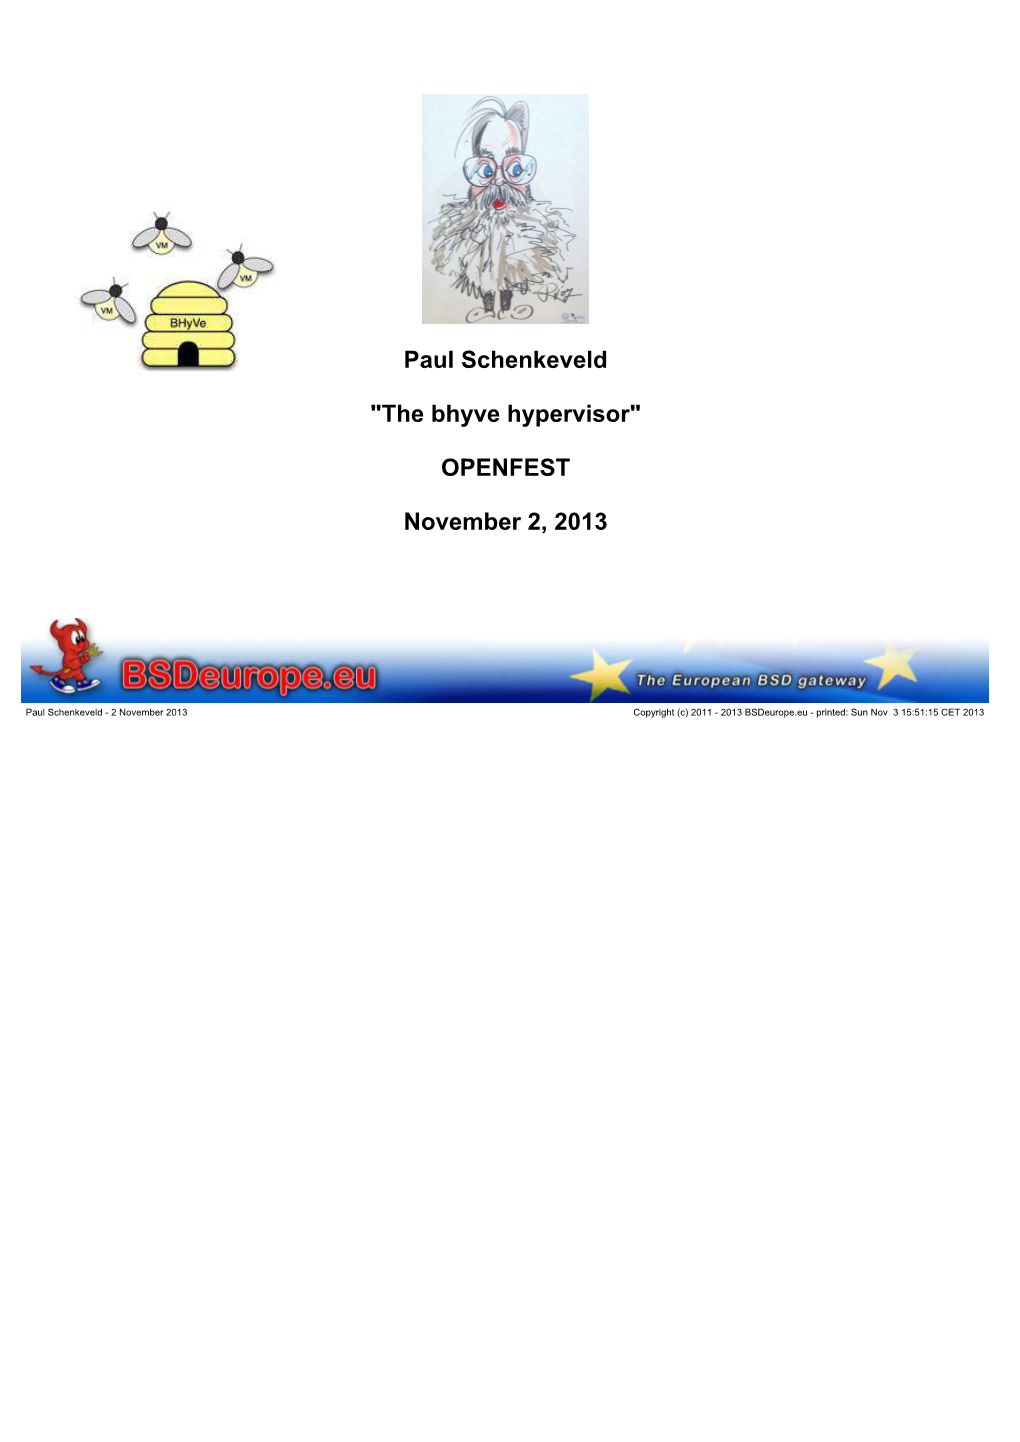 The Bhyve Hypervisor"